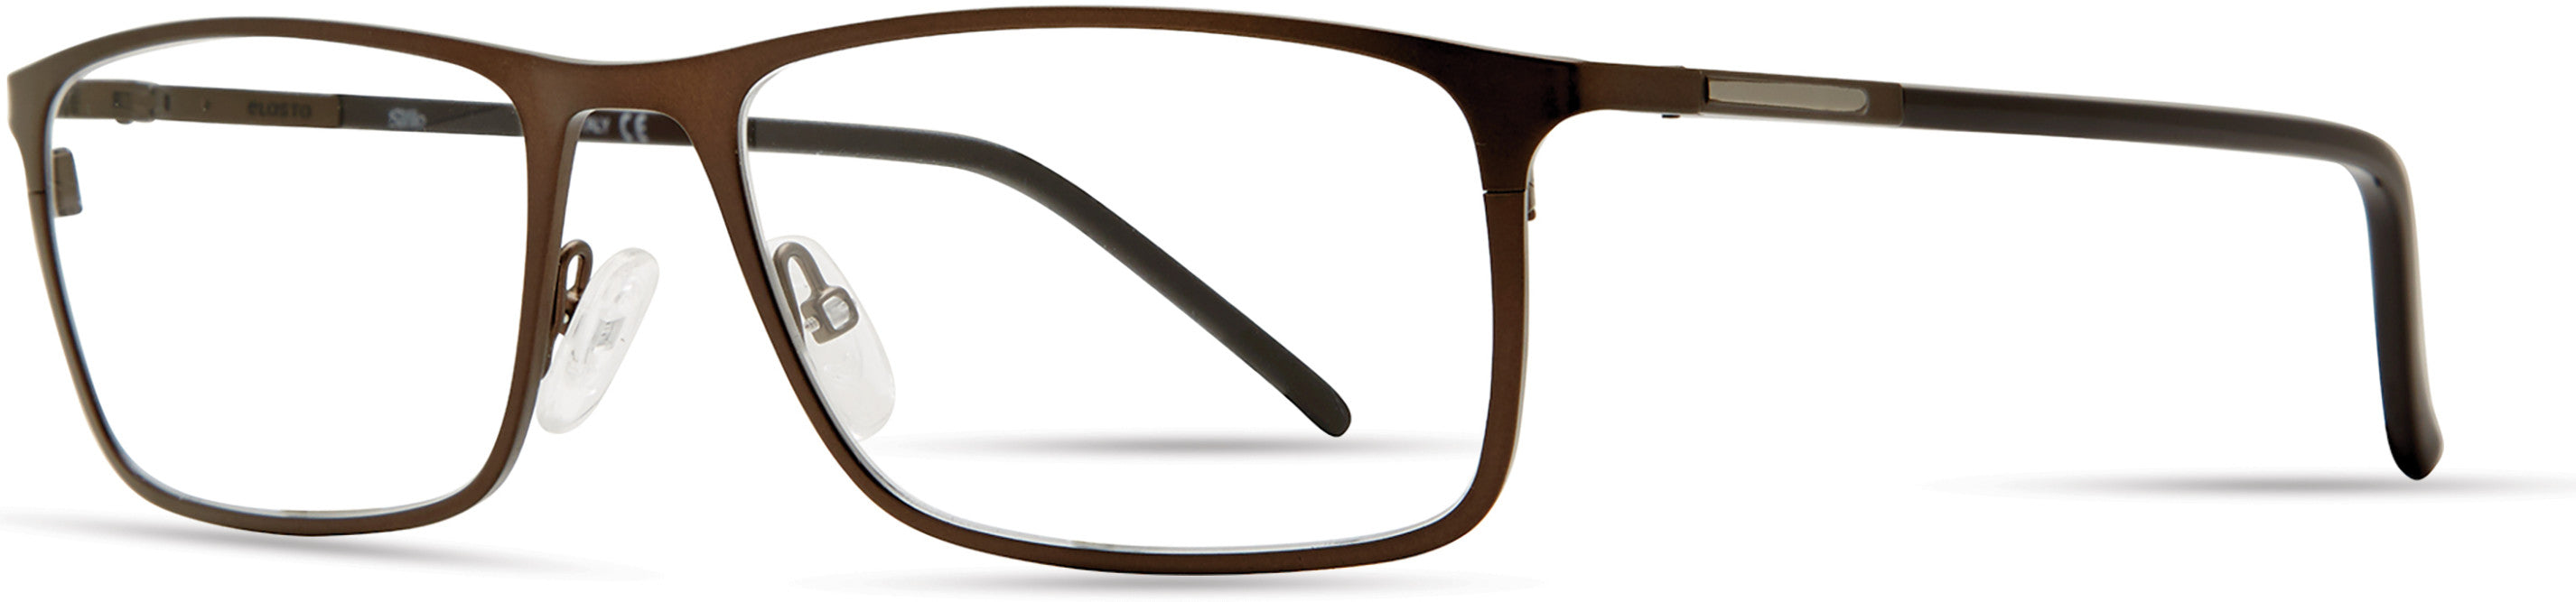  Elasta 7231 Rectangular Eyeglasses 04IN-04IN  Matte Brown (00 Demo Lens)